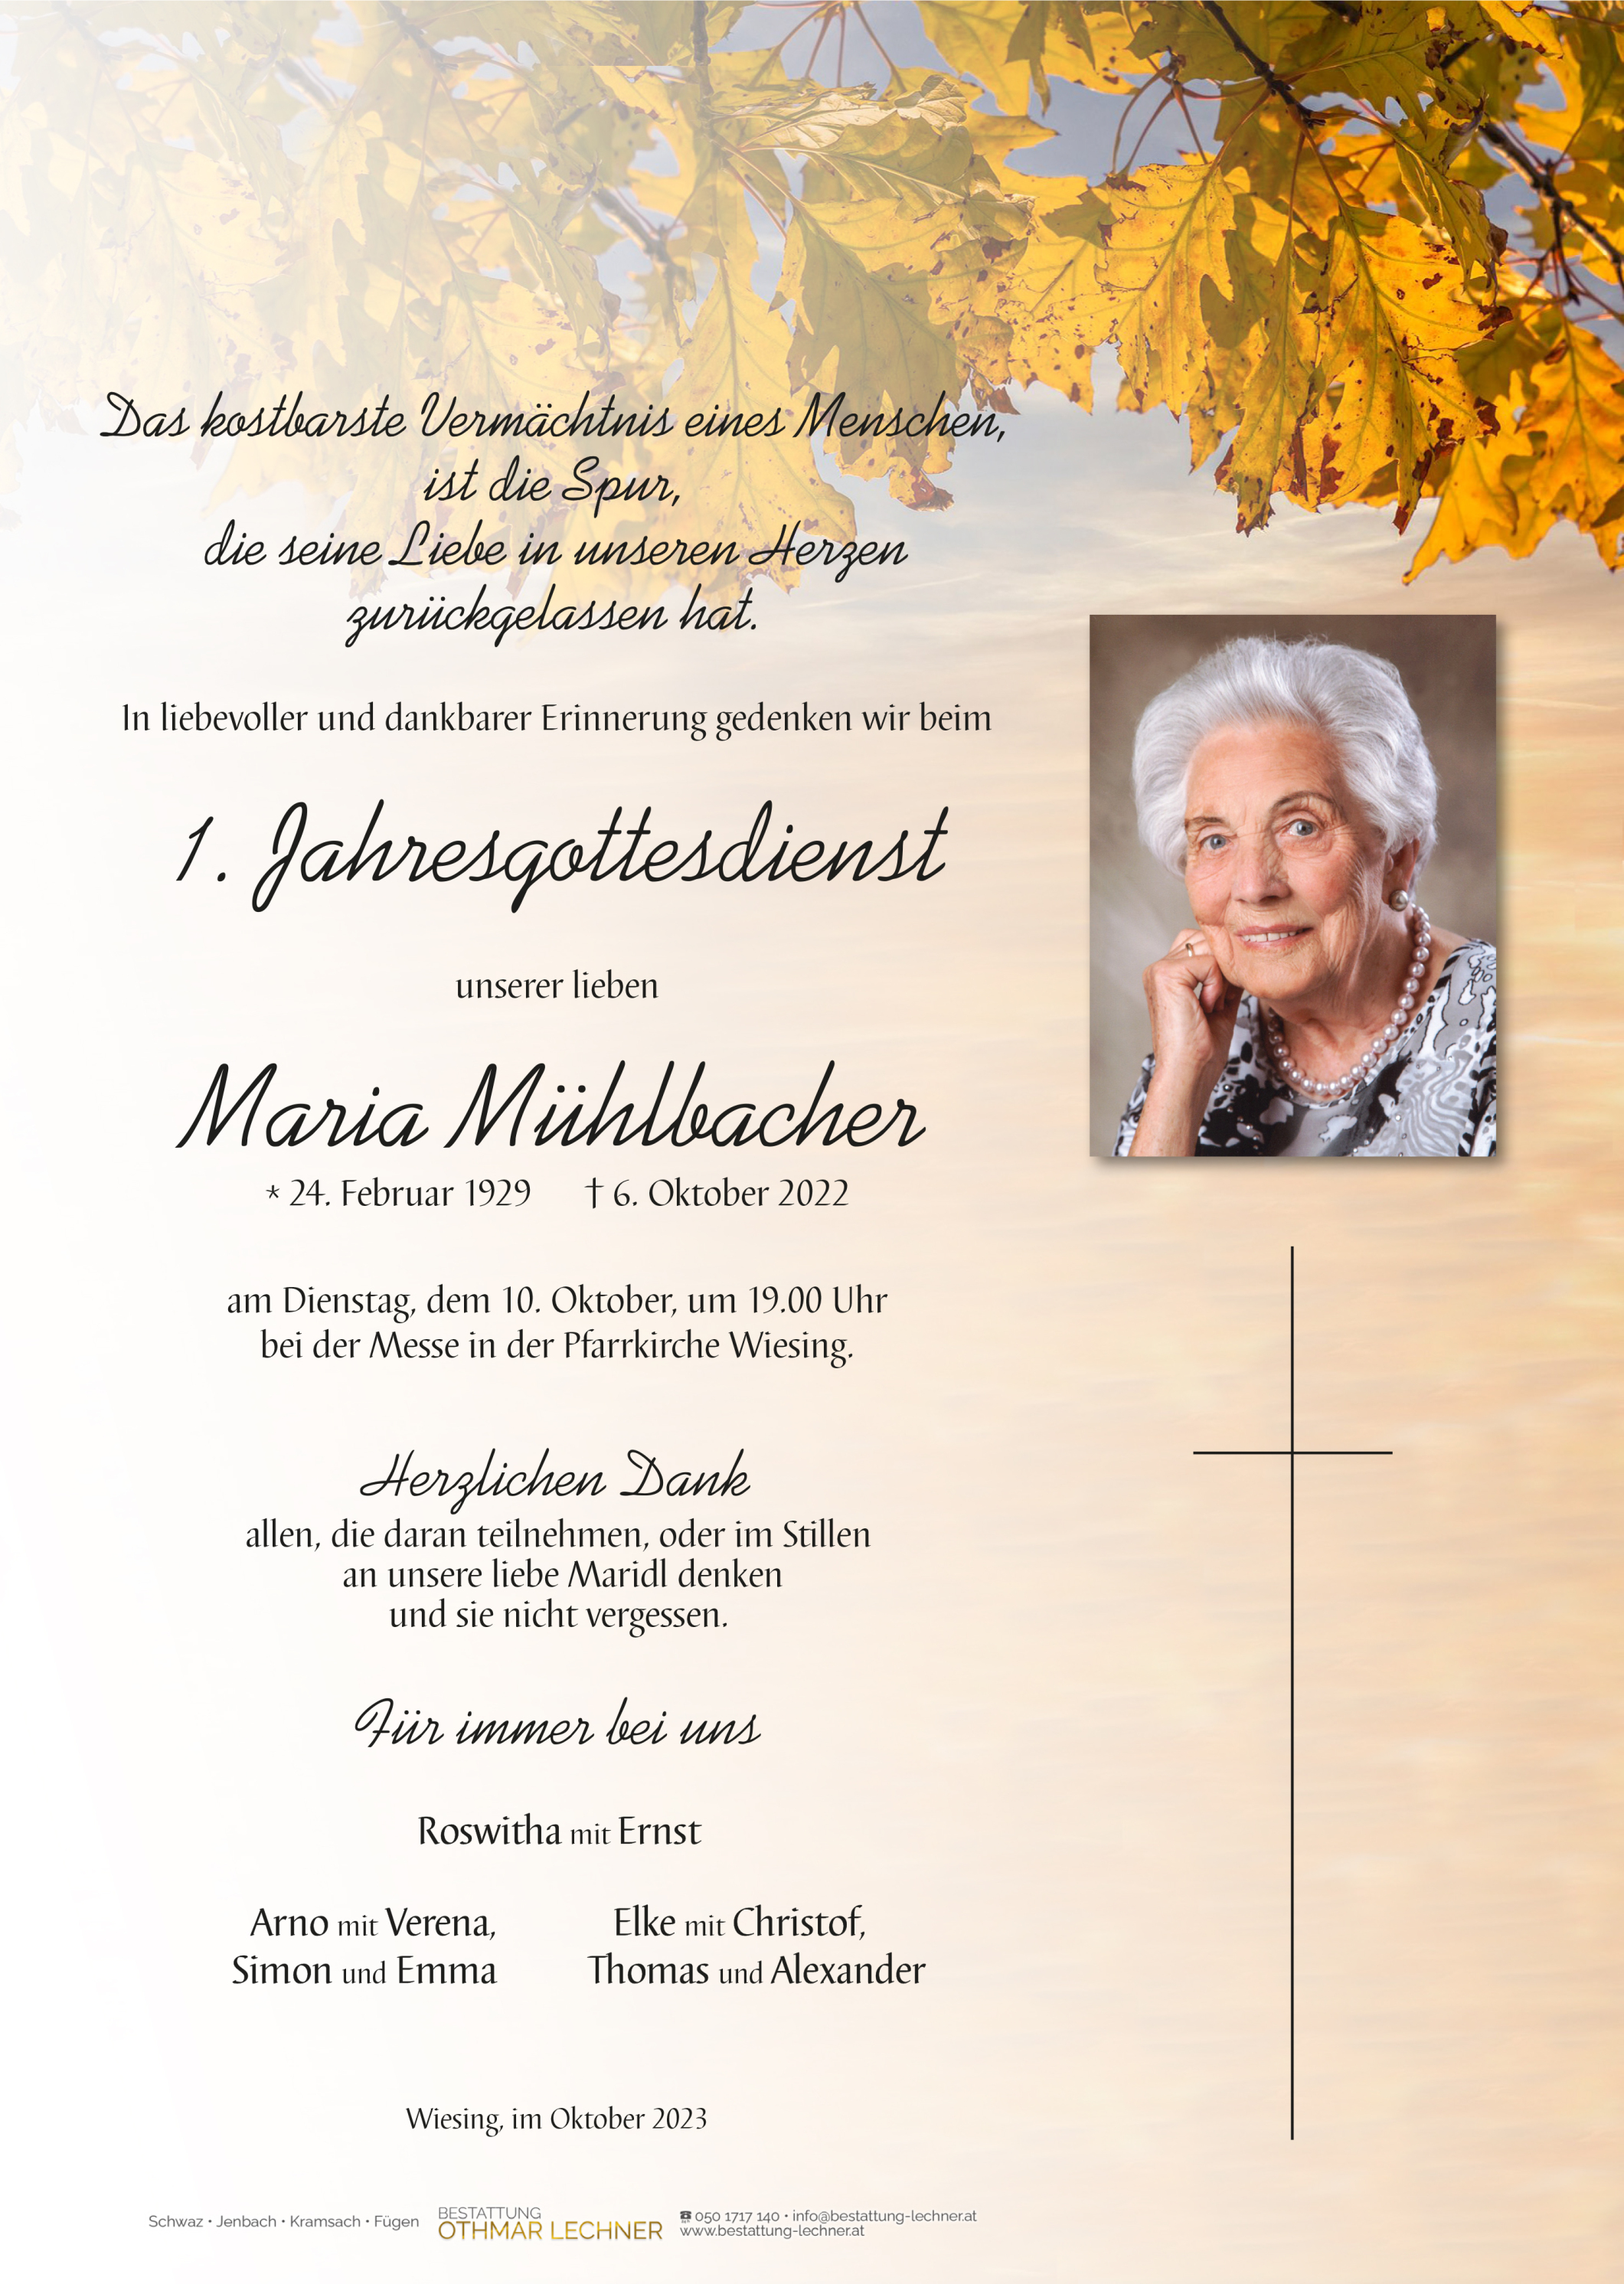 Maria Mühlbacher